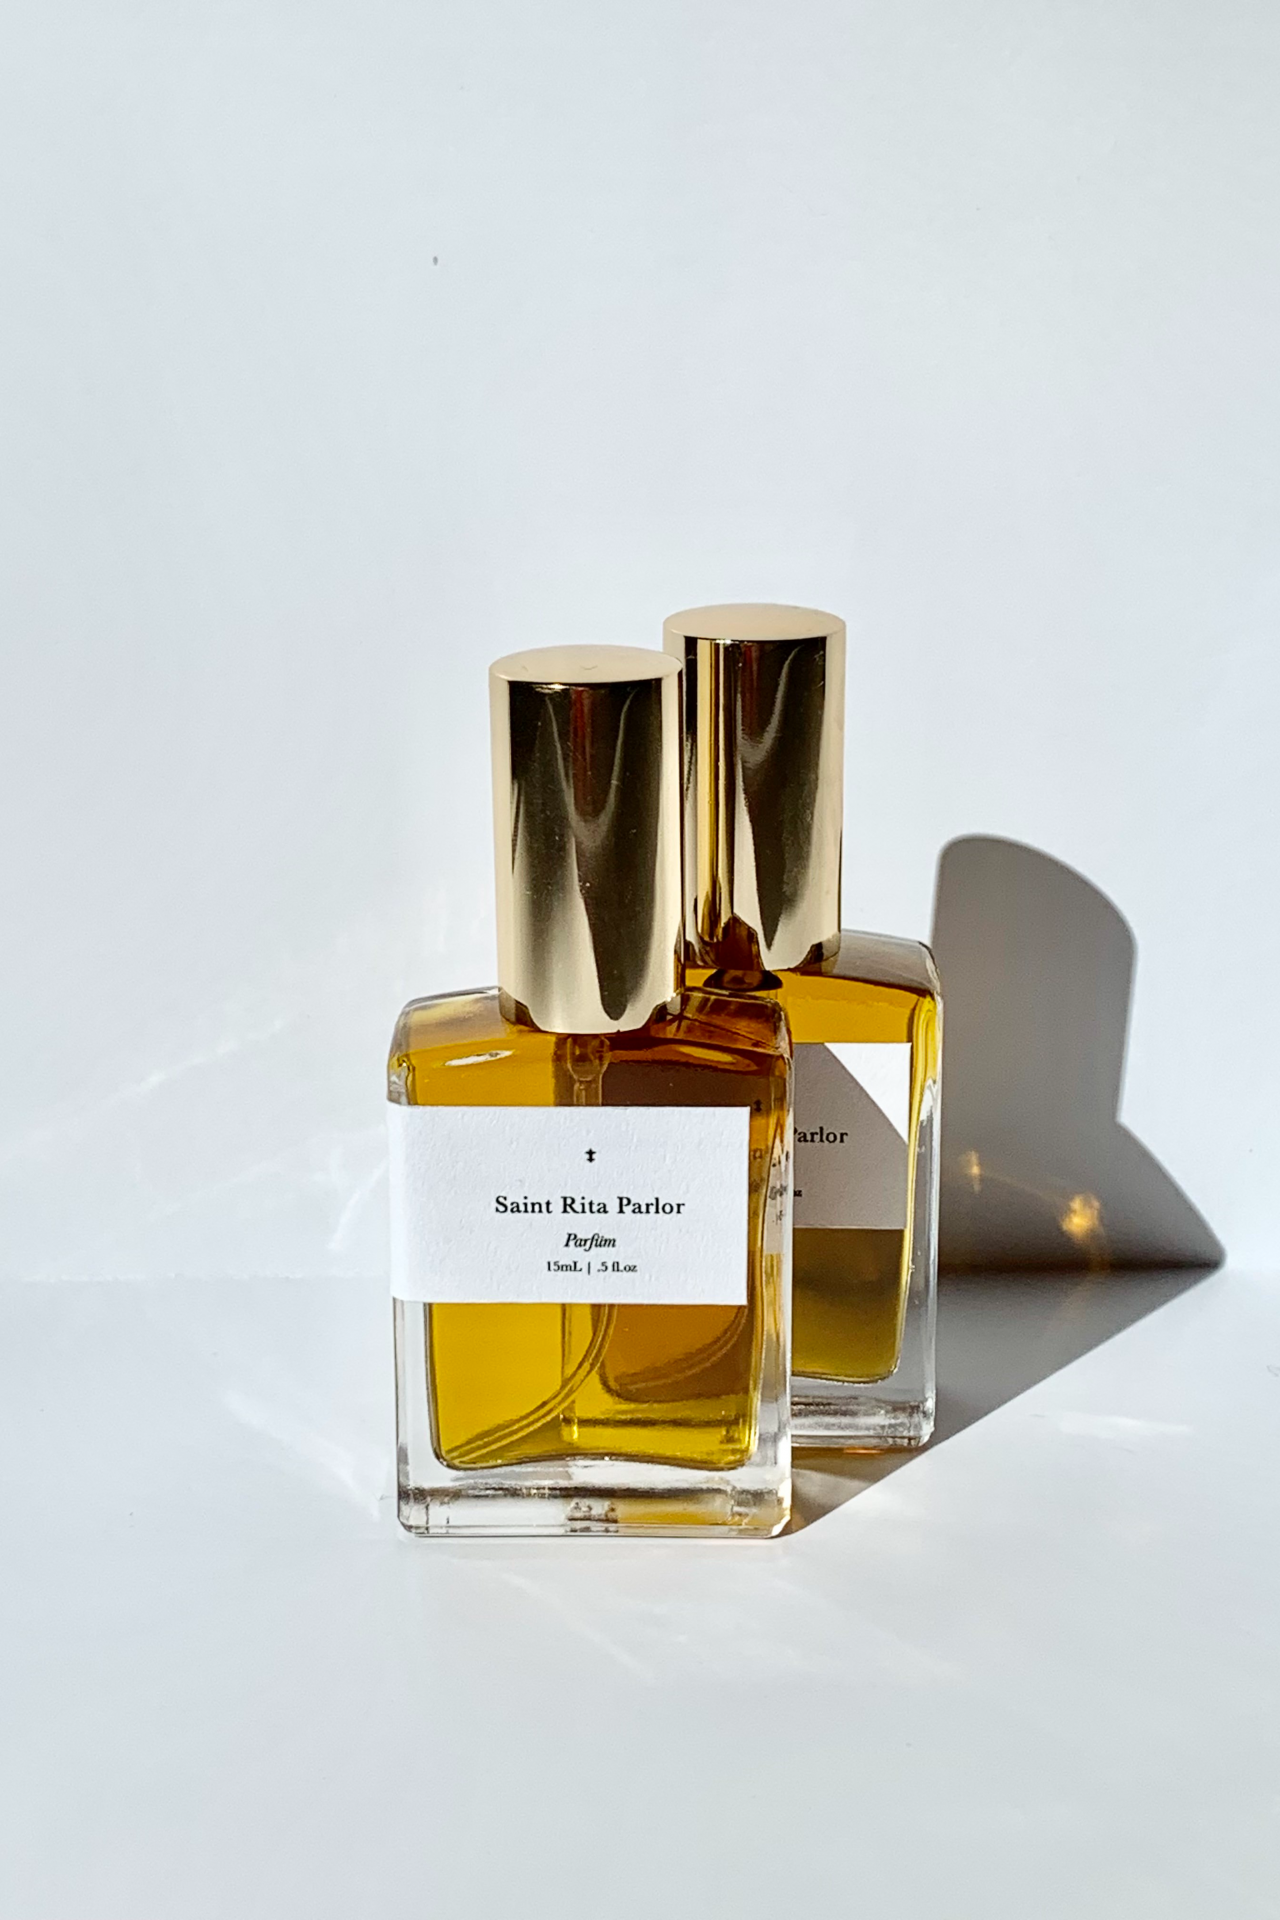 Saint Rita Parlor Signature Parfum